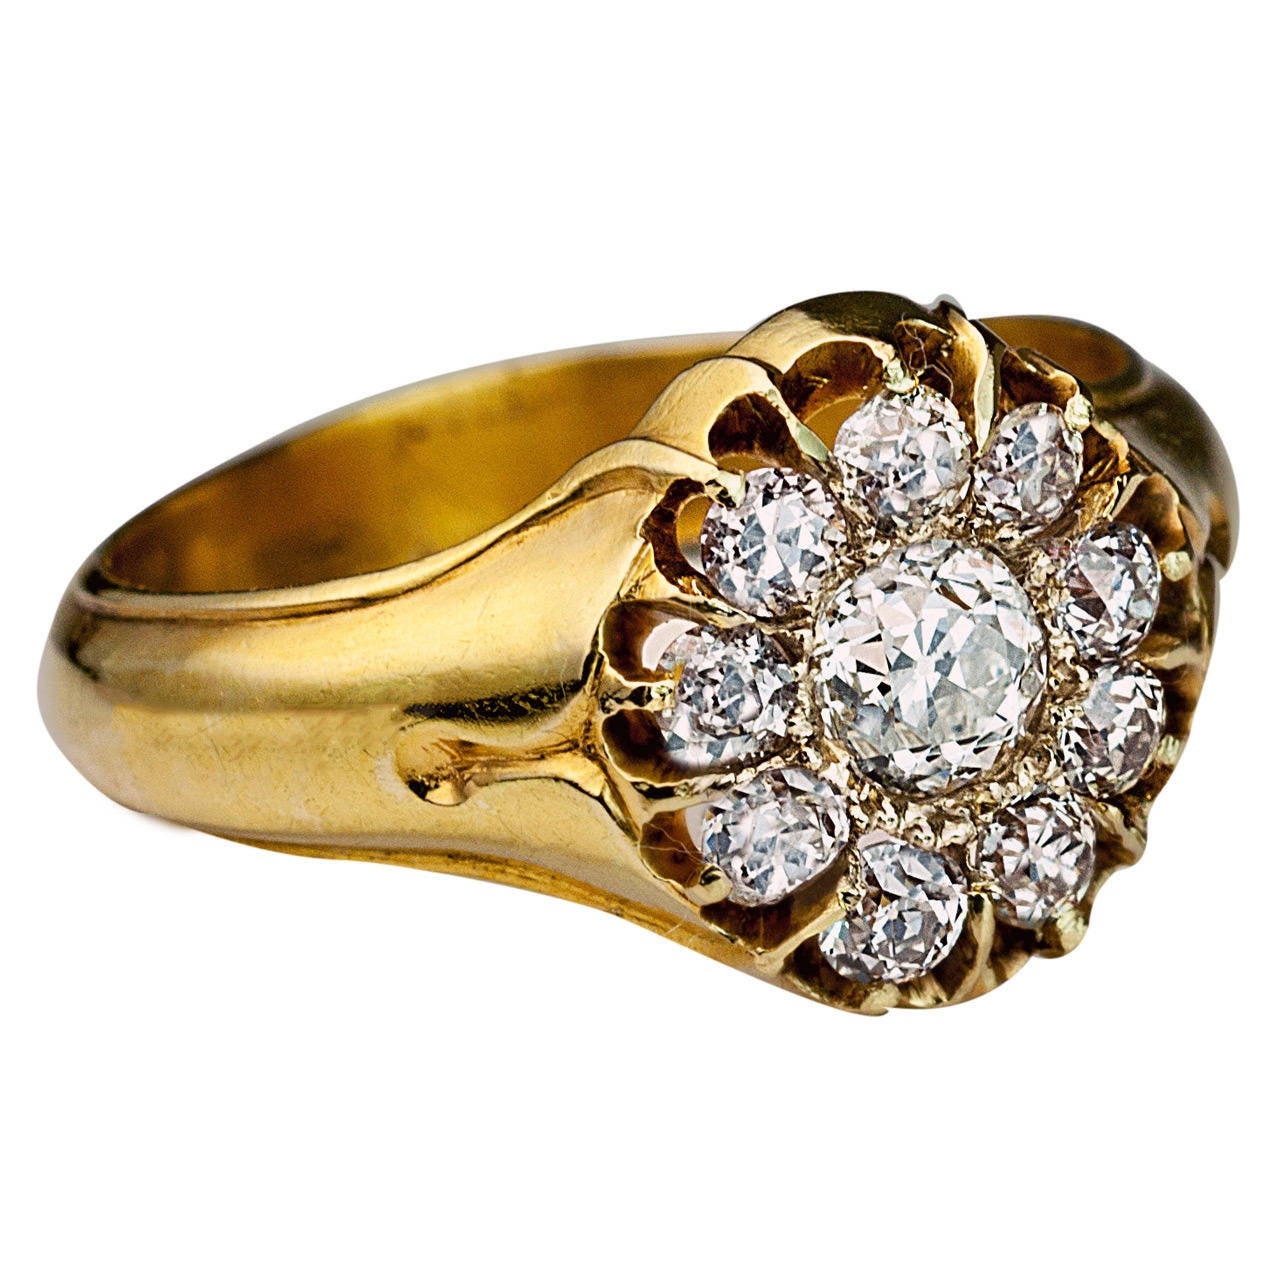 Antique 1800s Men's Diamond Cluster Gold Ring